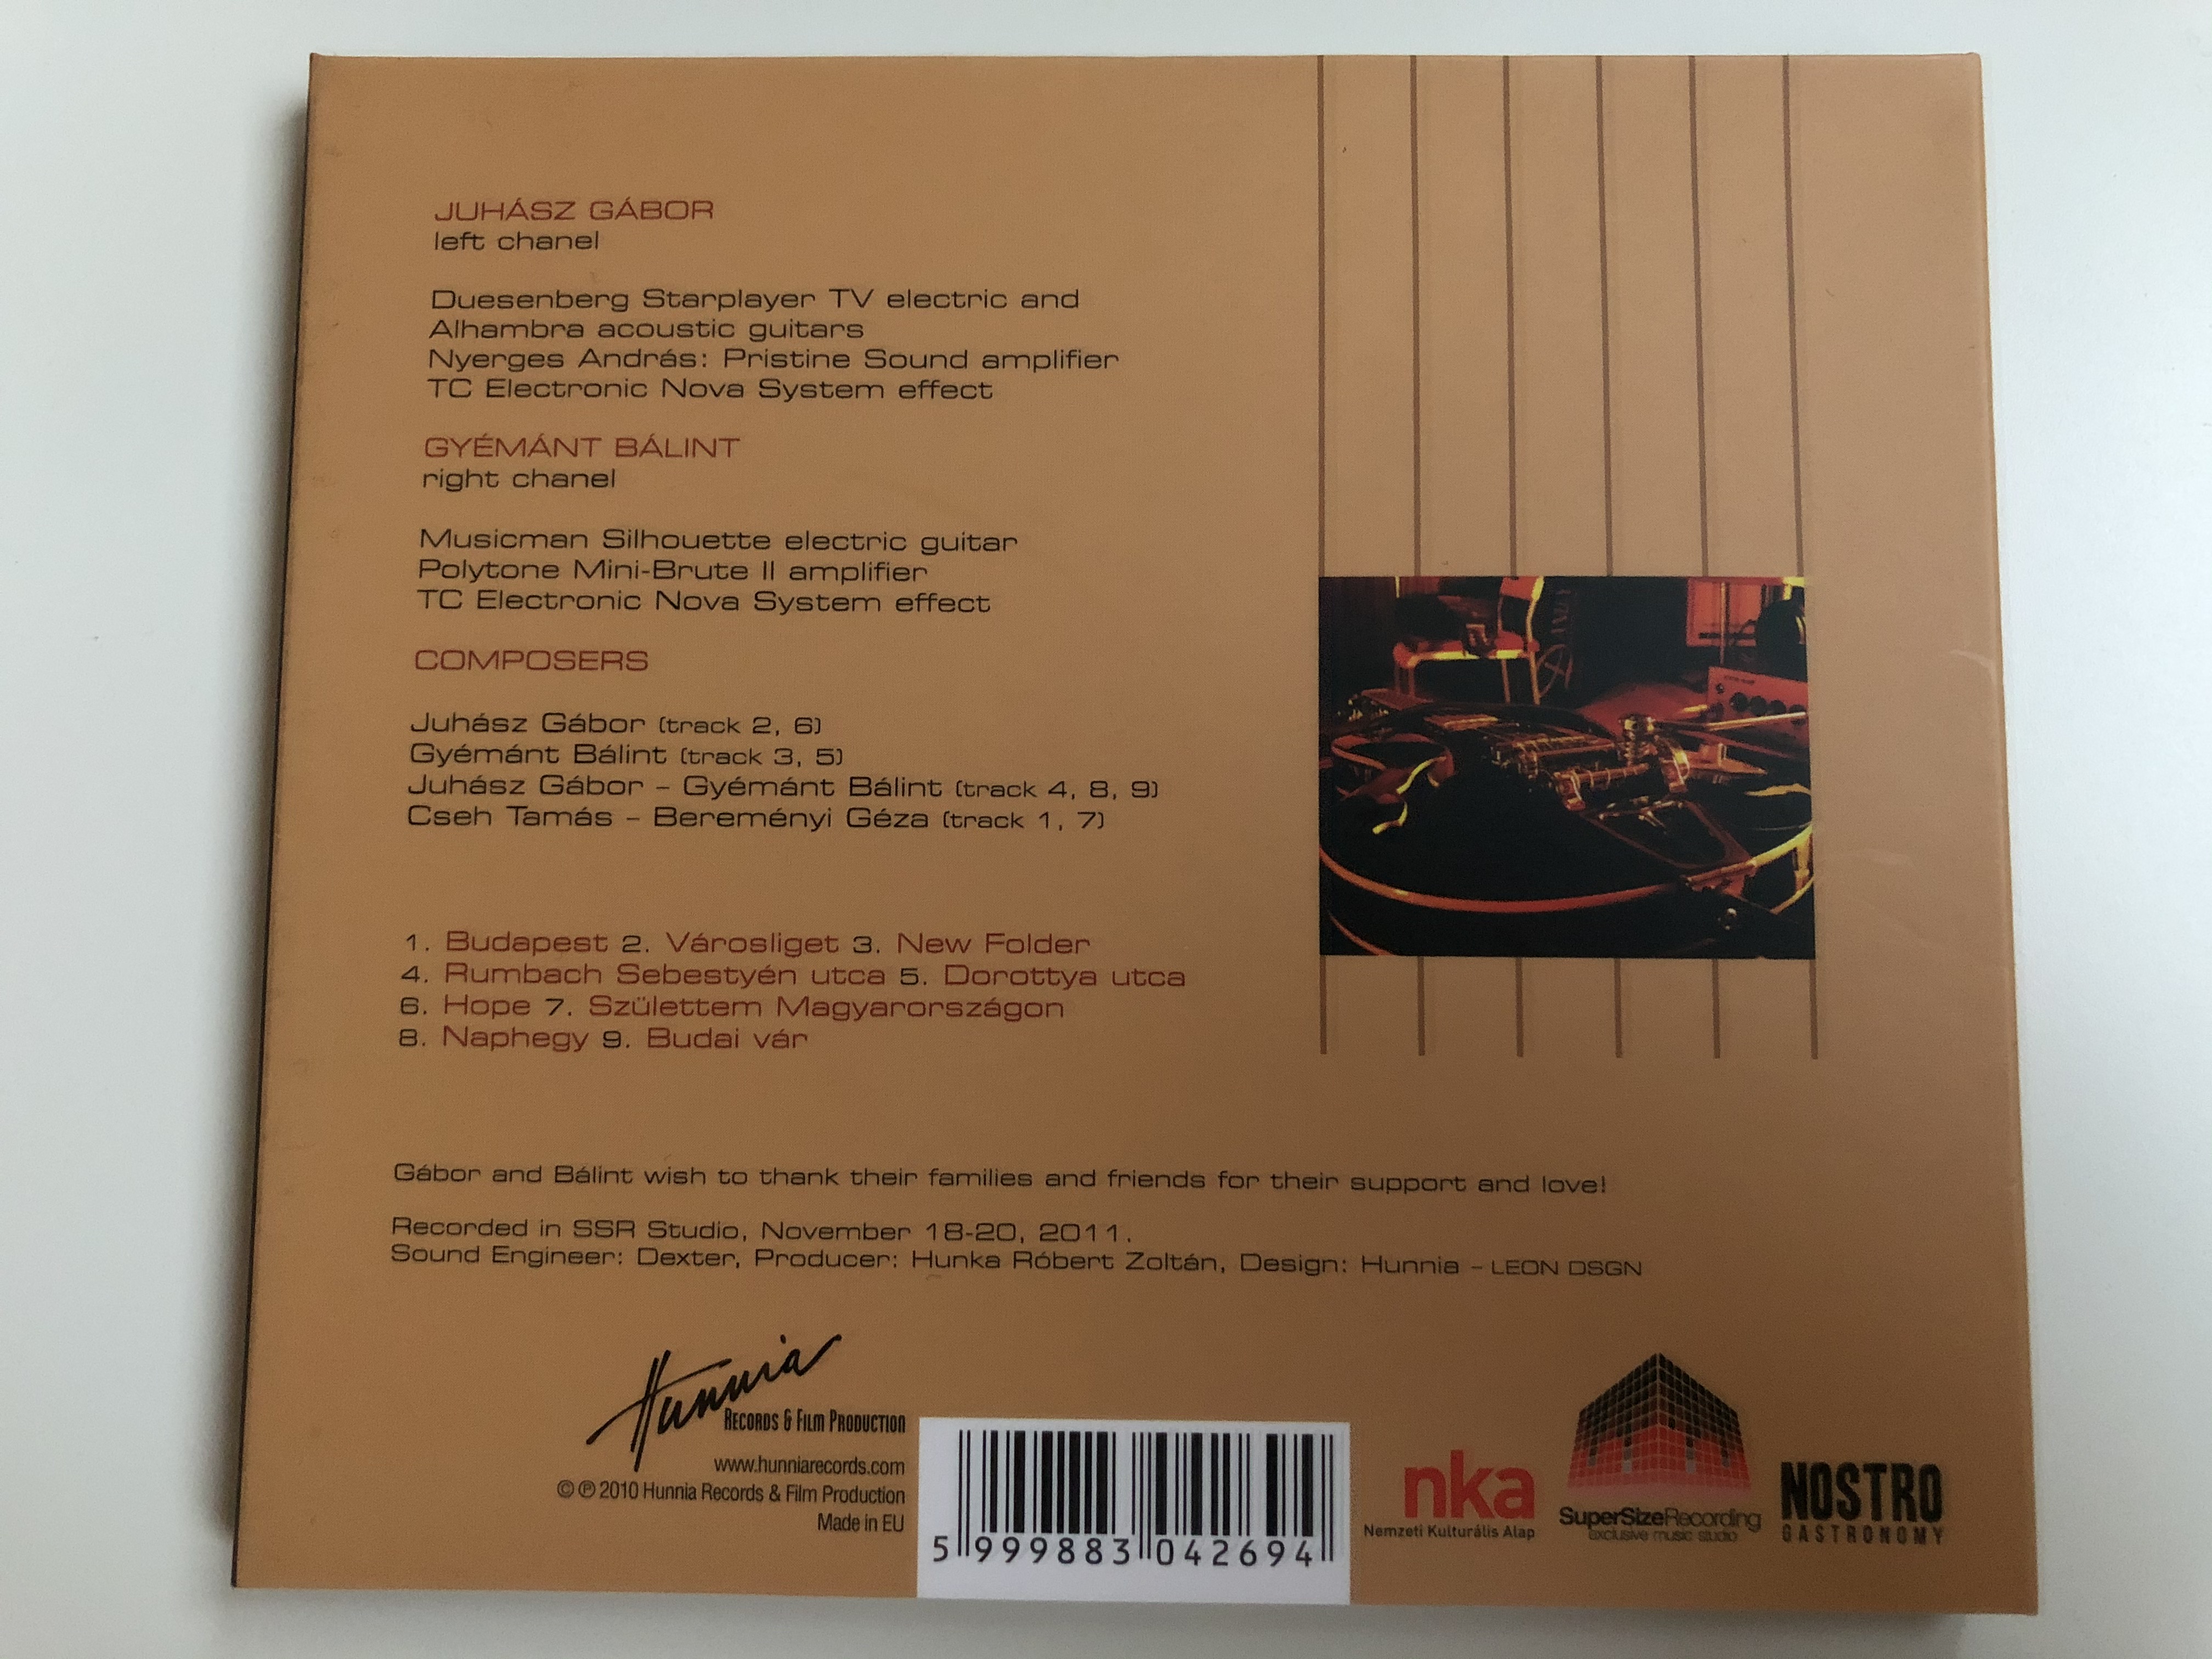 juhasz-gabor-gyemant-balint-budapest-hunnia-records-film-production-audio-cd-2011-hrcd1110-6-.jpg